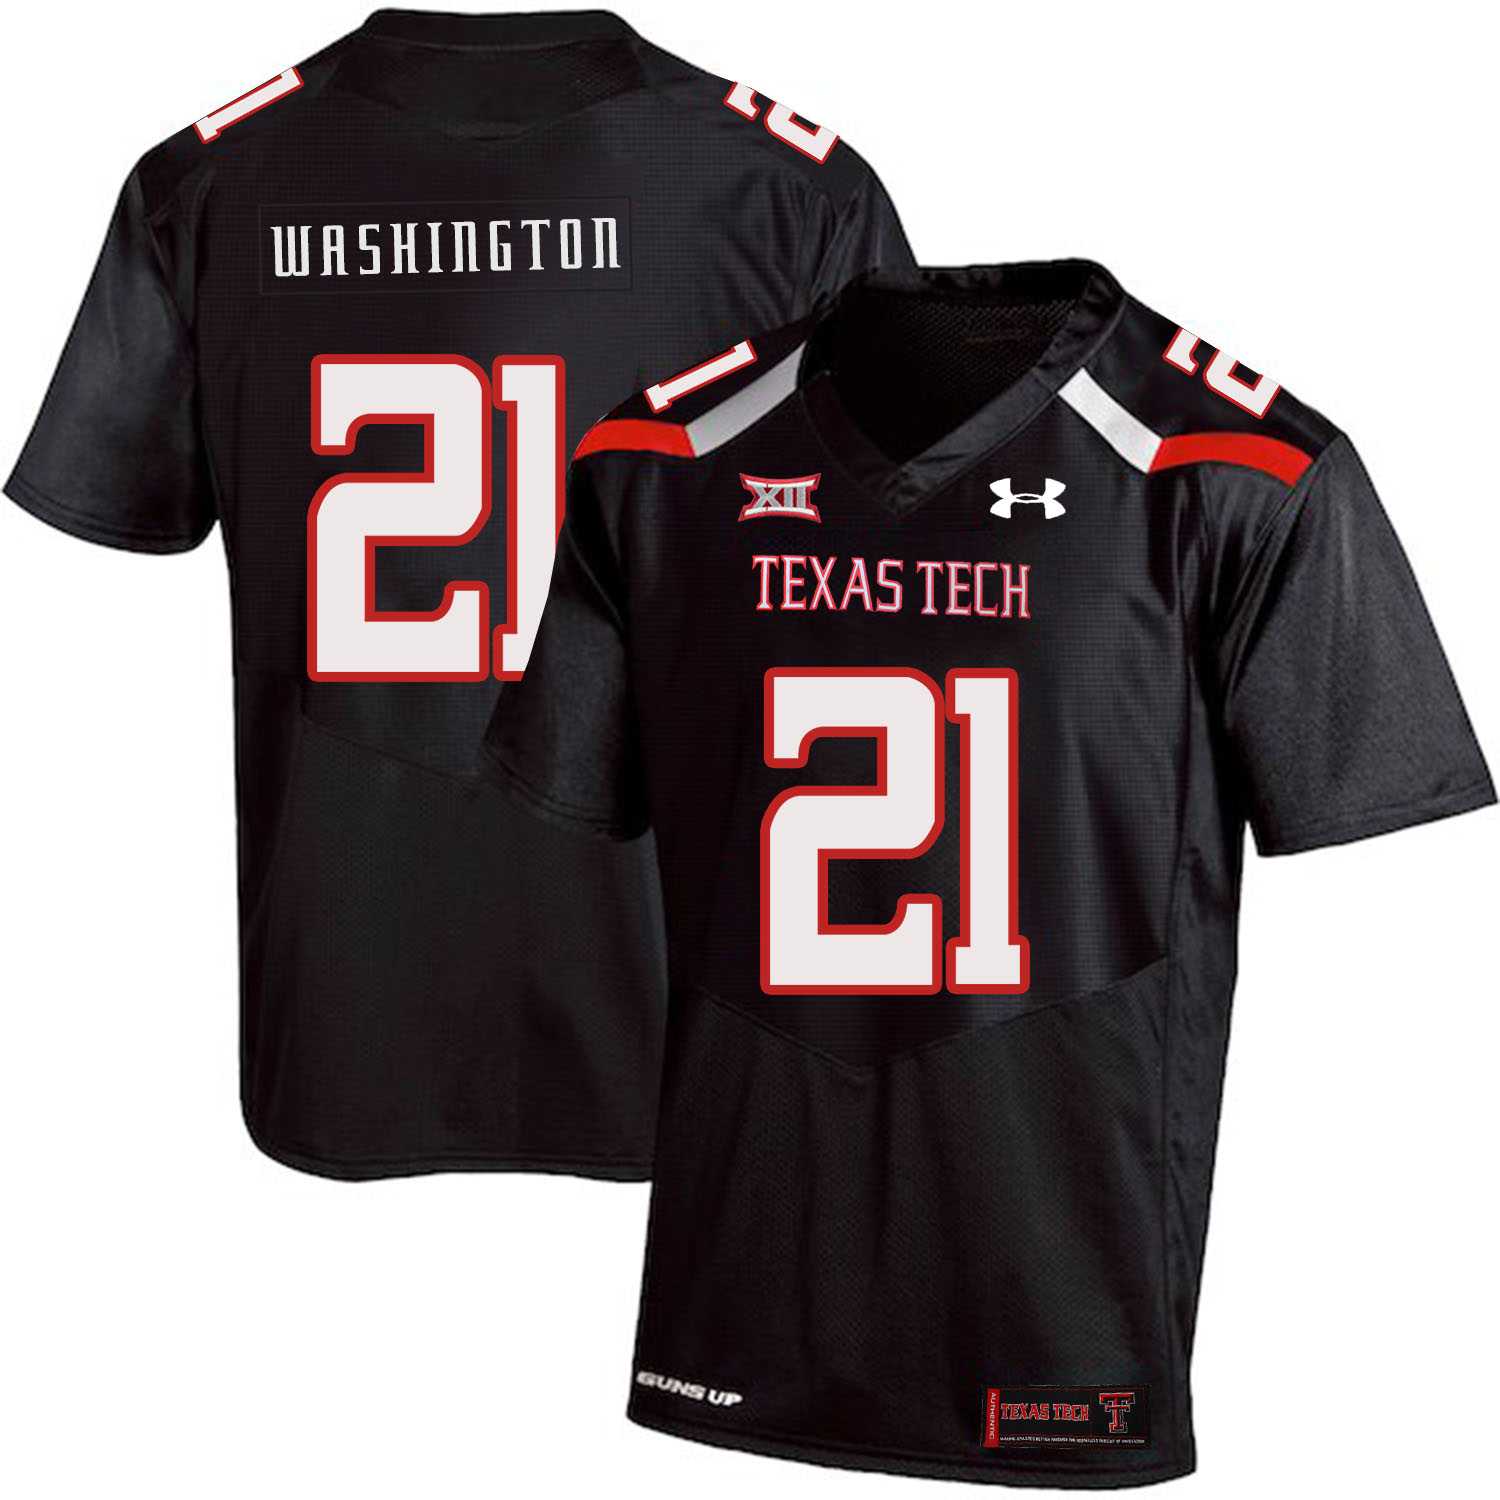 Texas Tech Red Raiders 21 DeAndre Washington Black College Football Jersey Dzhi